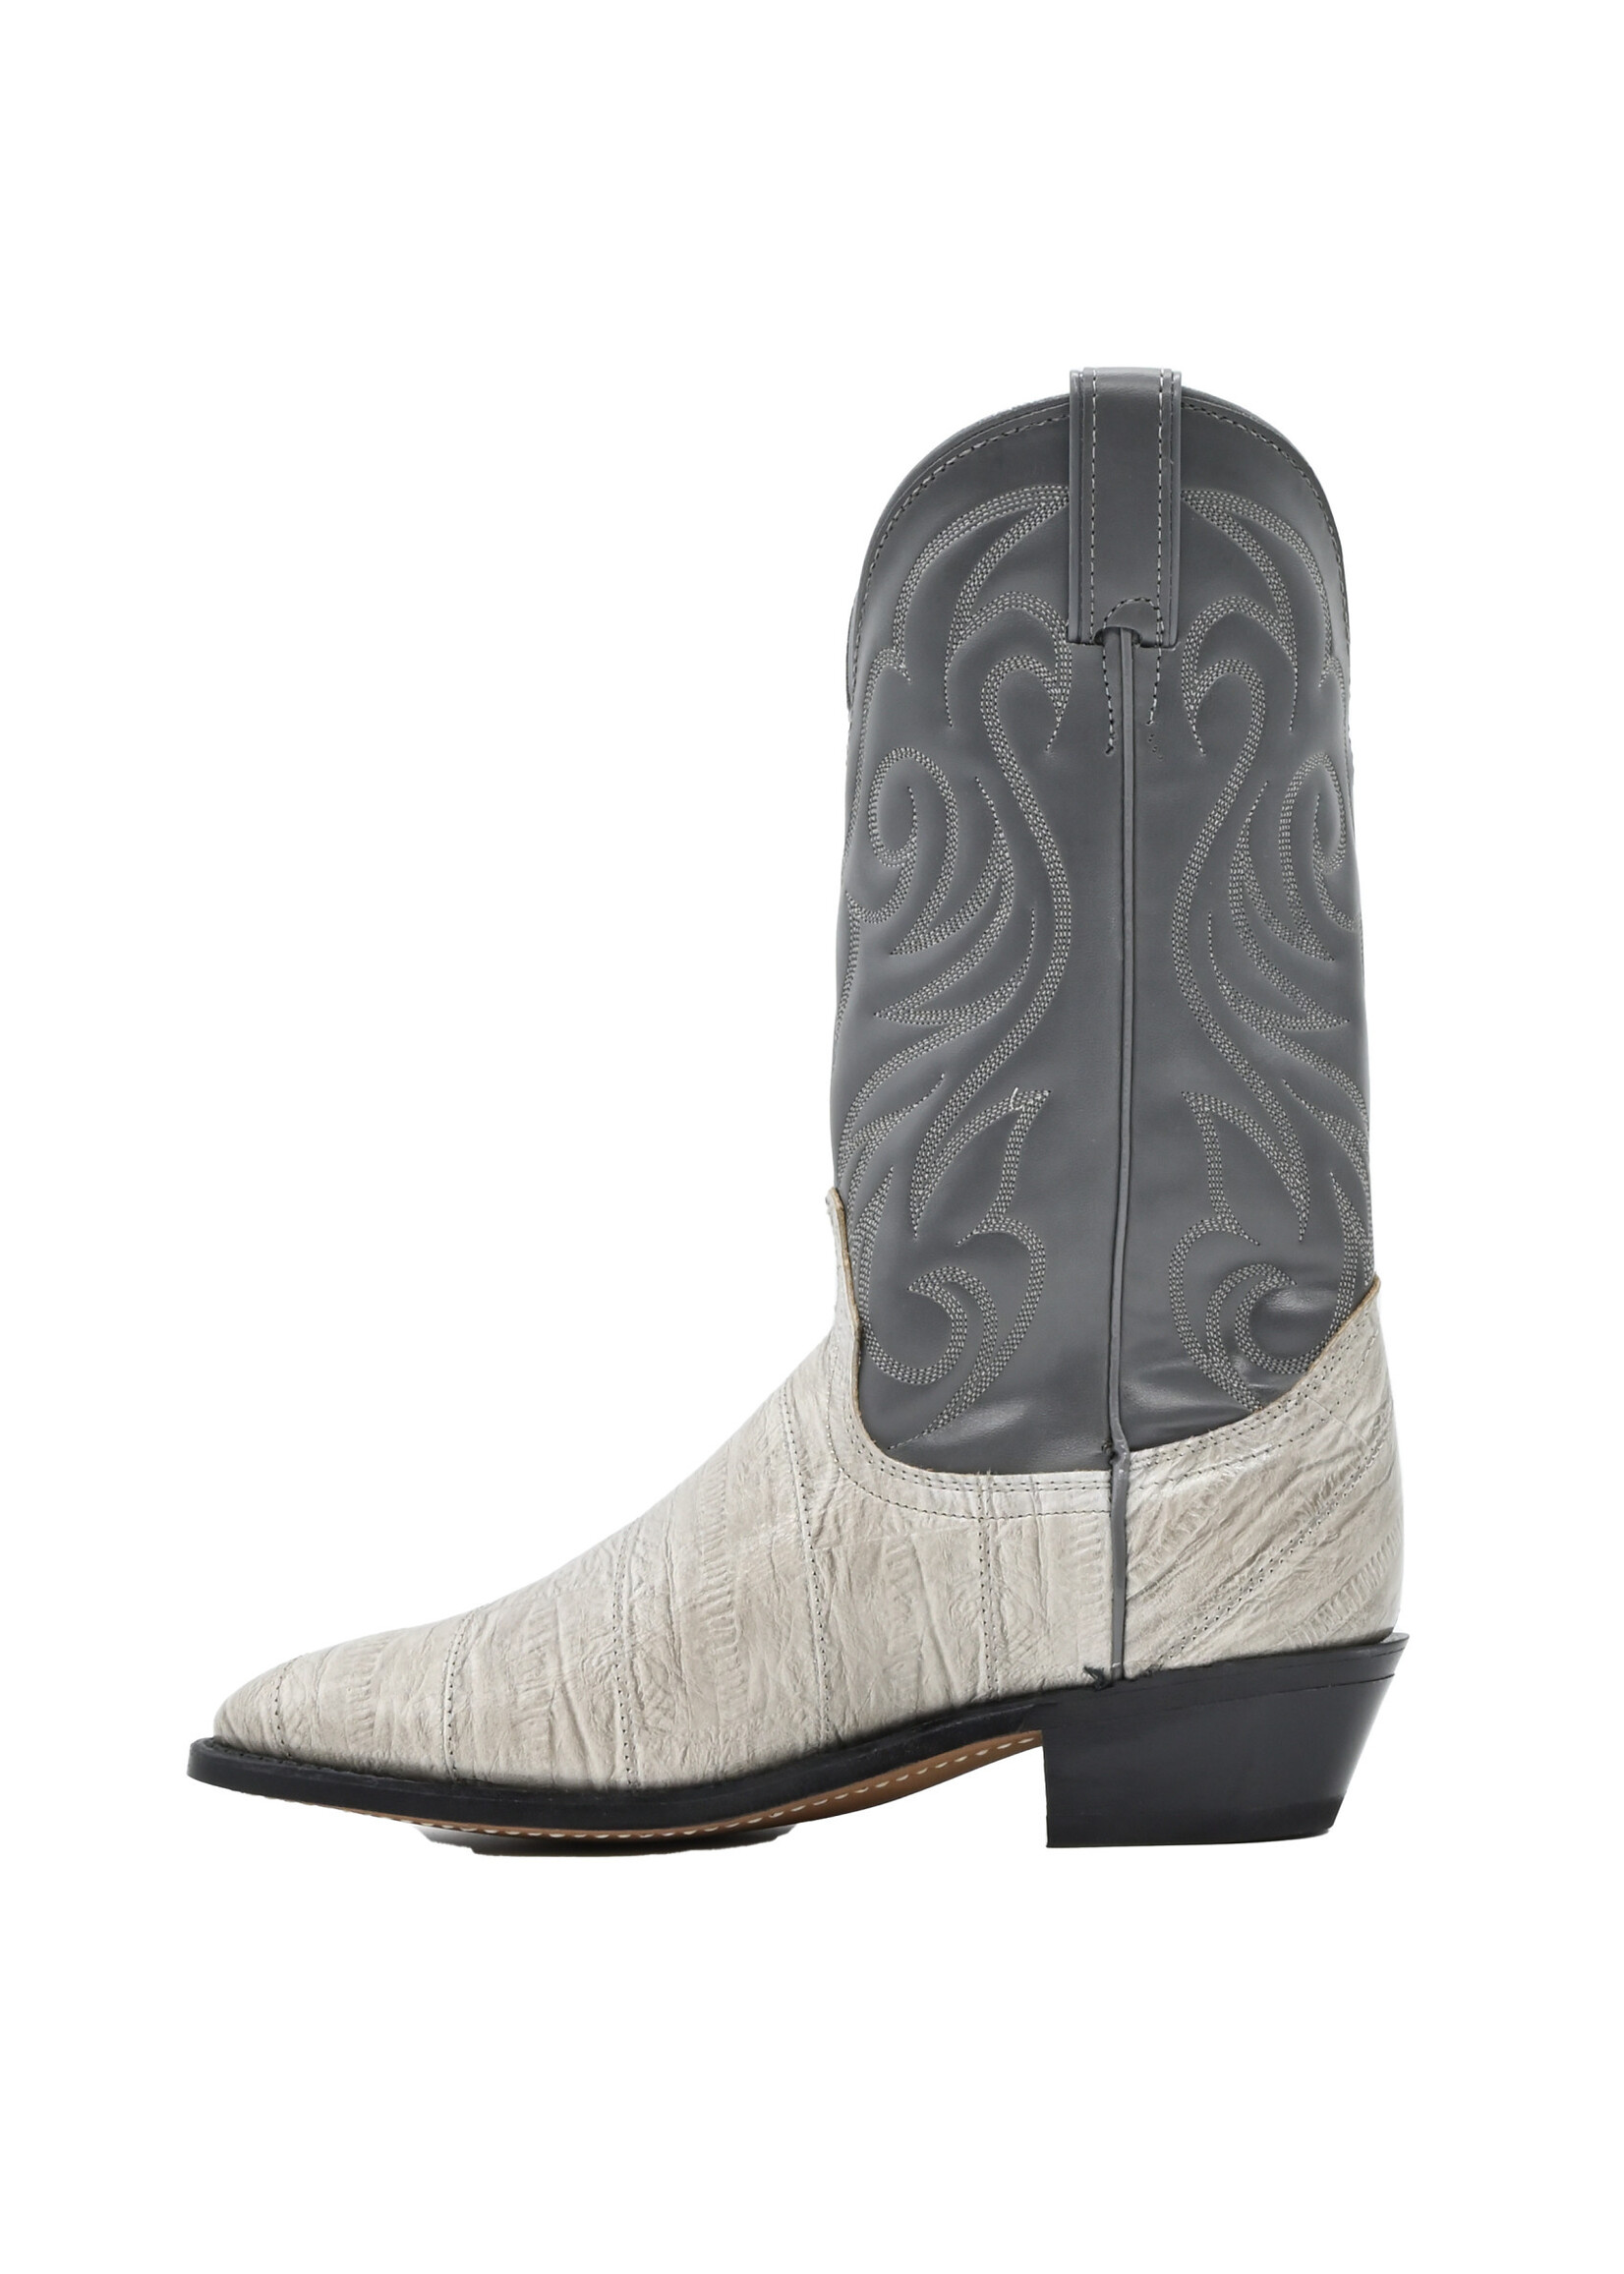 Abilene 6171 - Grey Round Toe Boot (Size 8D)